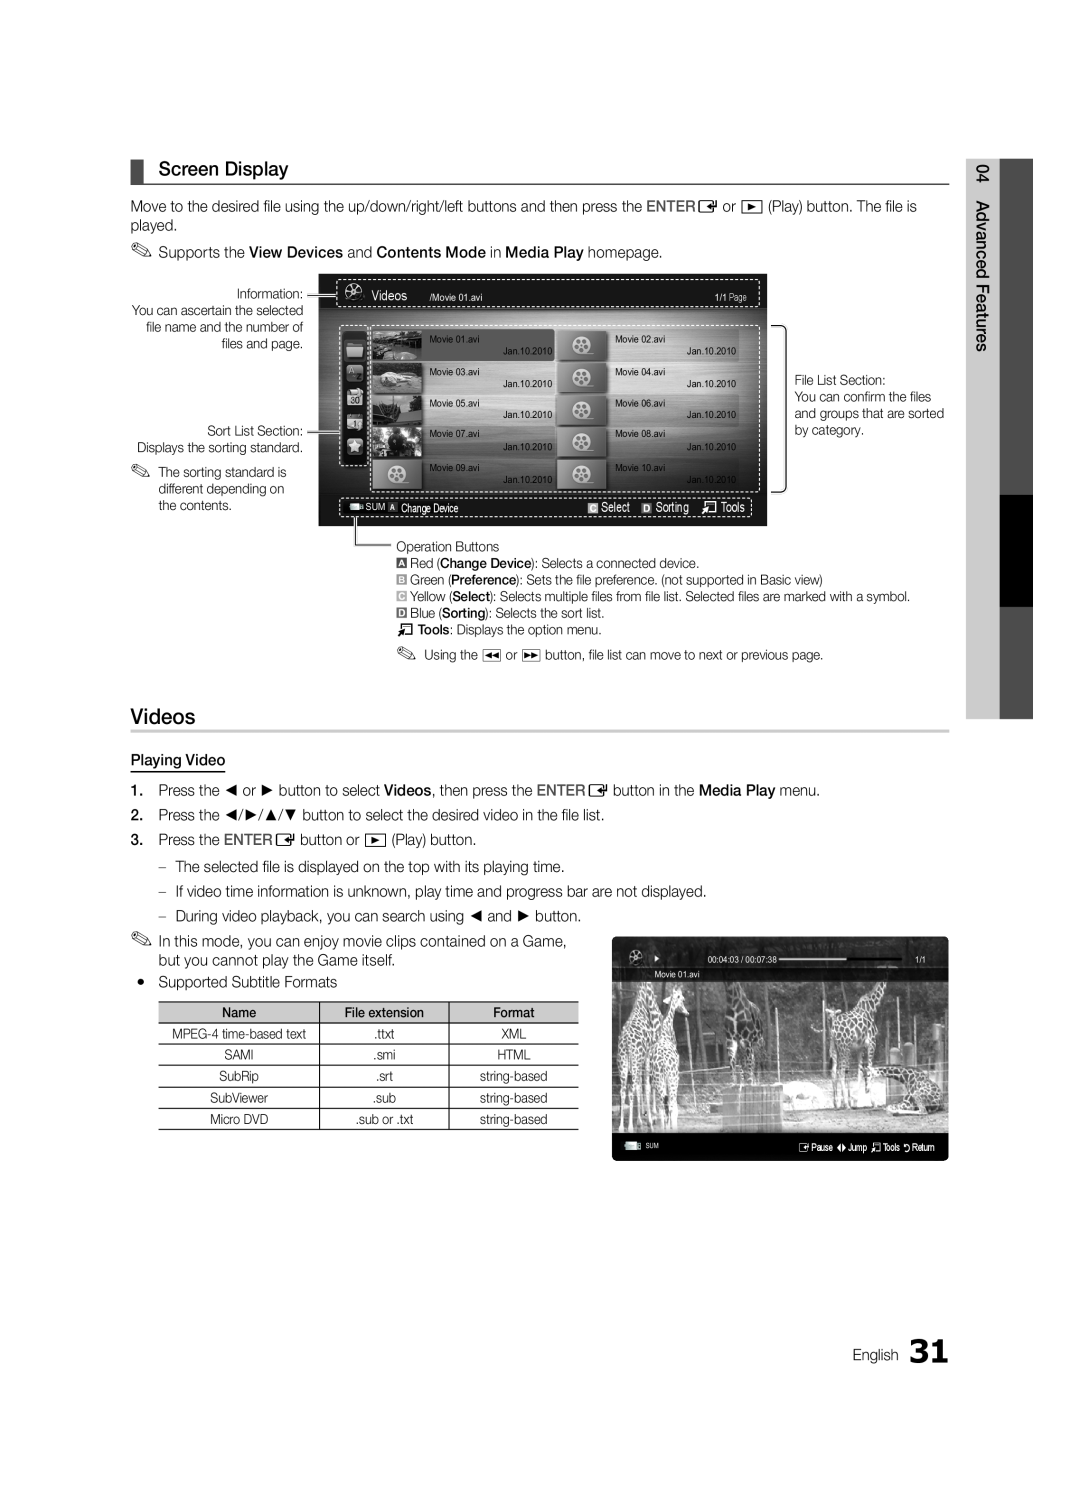 Samsung LN32C550 user manual Videos, Screen Display 